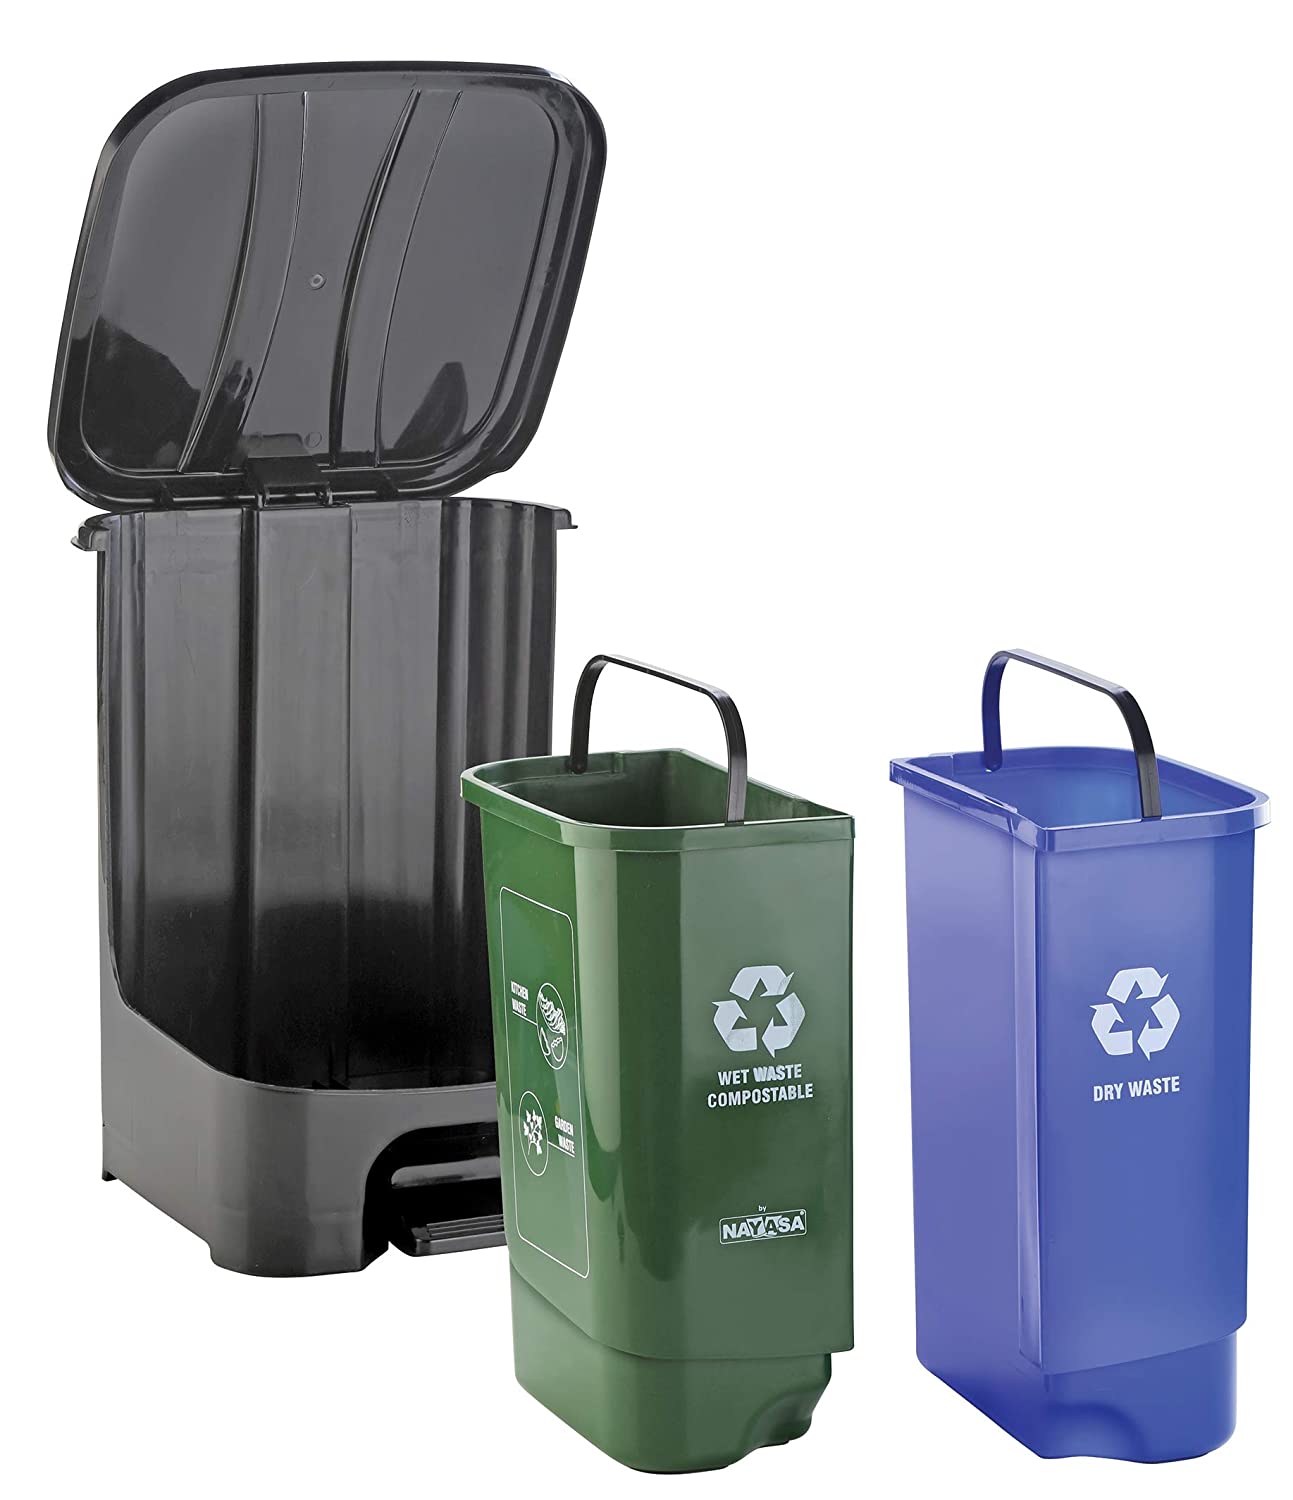 NAYASA 2 in 1 Dustbin - Dry Waste and Wet Waste Dustbin (35 Ltrs) - Big Plastic Dustbin (Blue,Green)